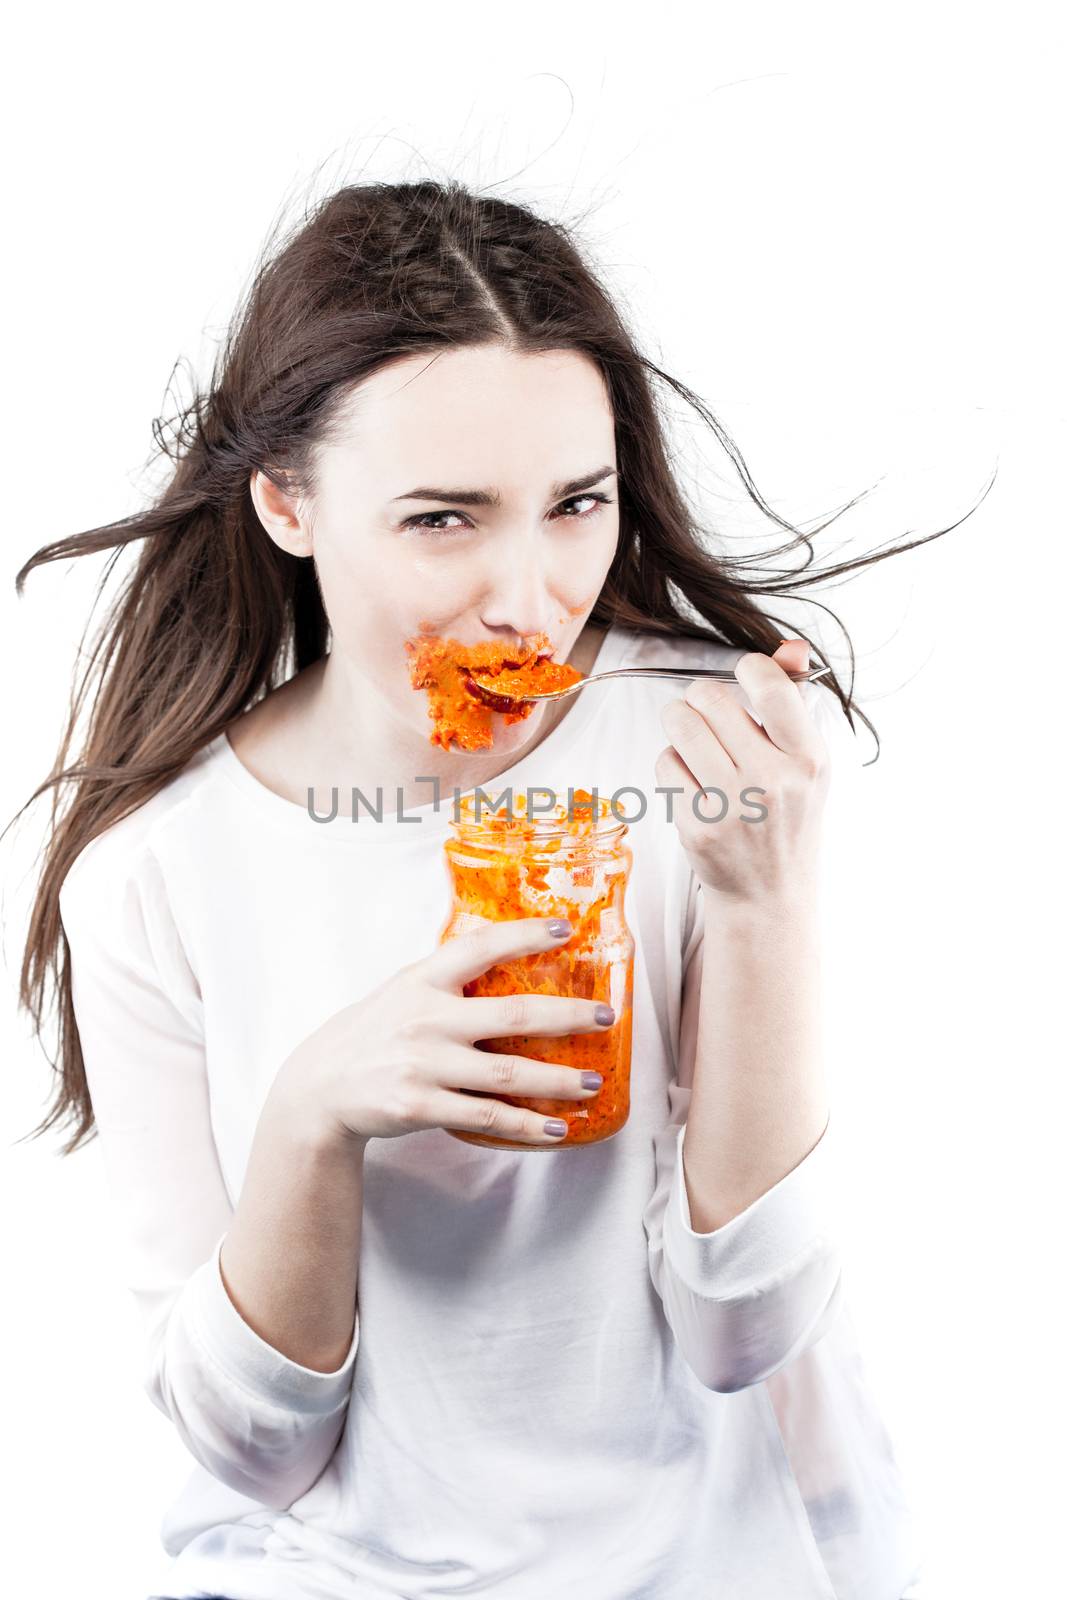 clumsy girl eating ajvar by kokimk